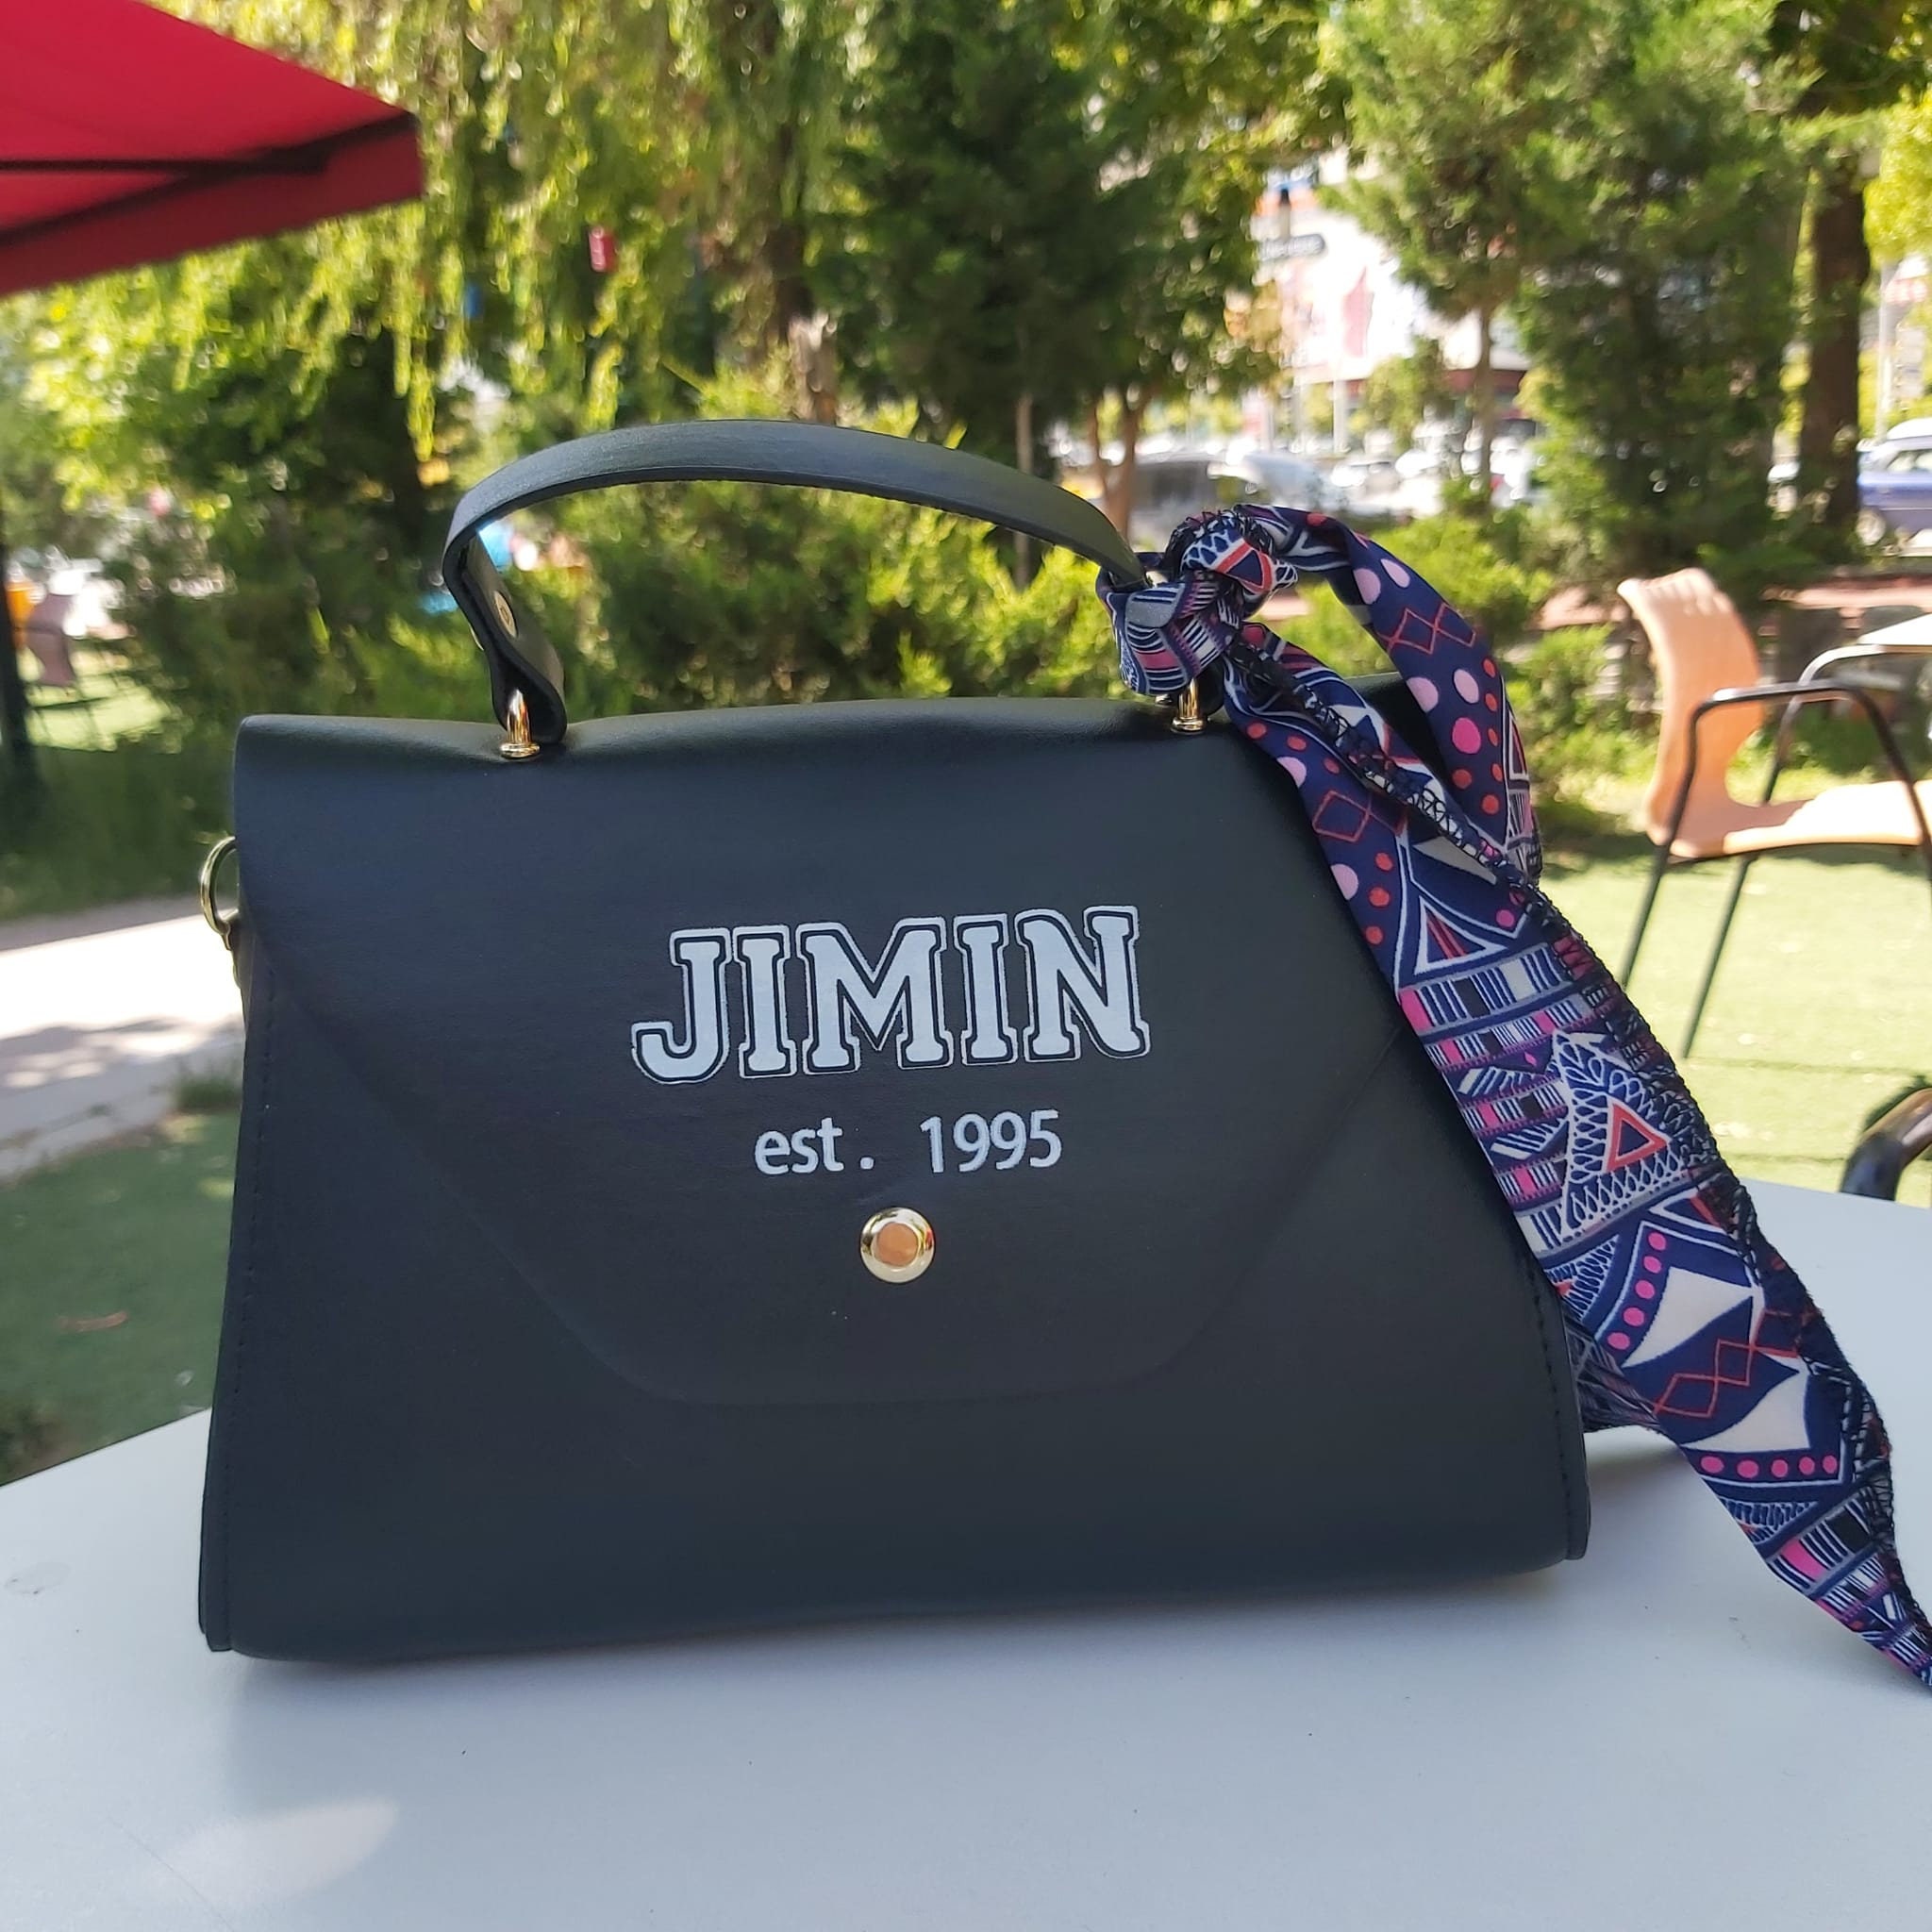 JIMIN Black Bag, kpop bag, bts bag, korean, bts